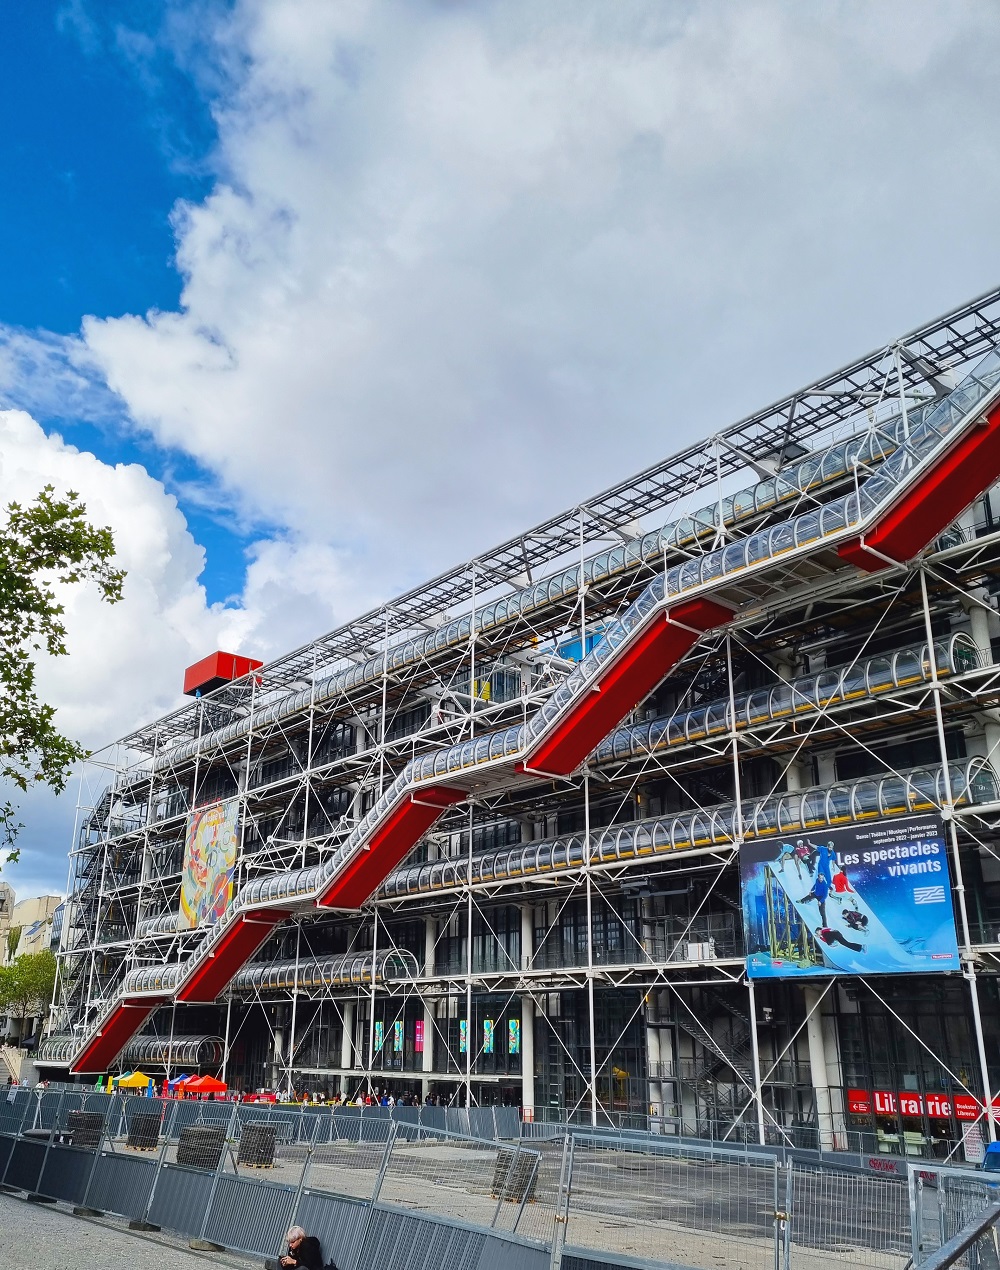 The Center Georges Pompidou